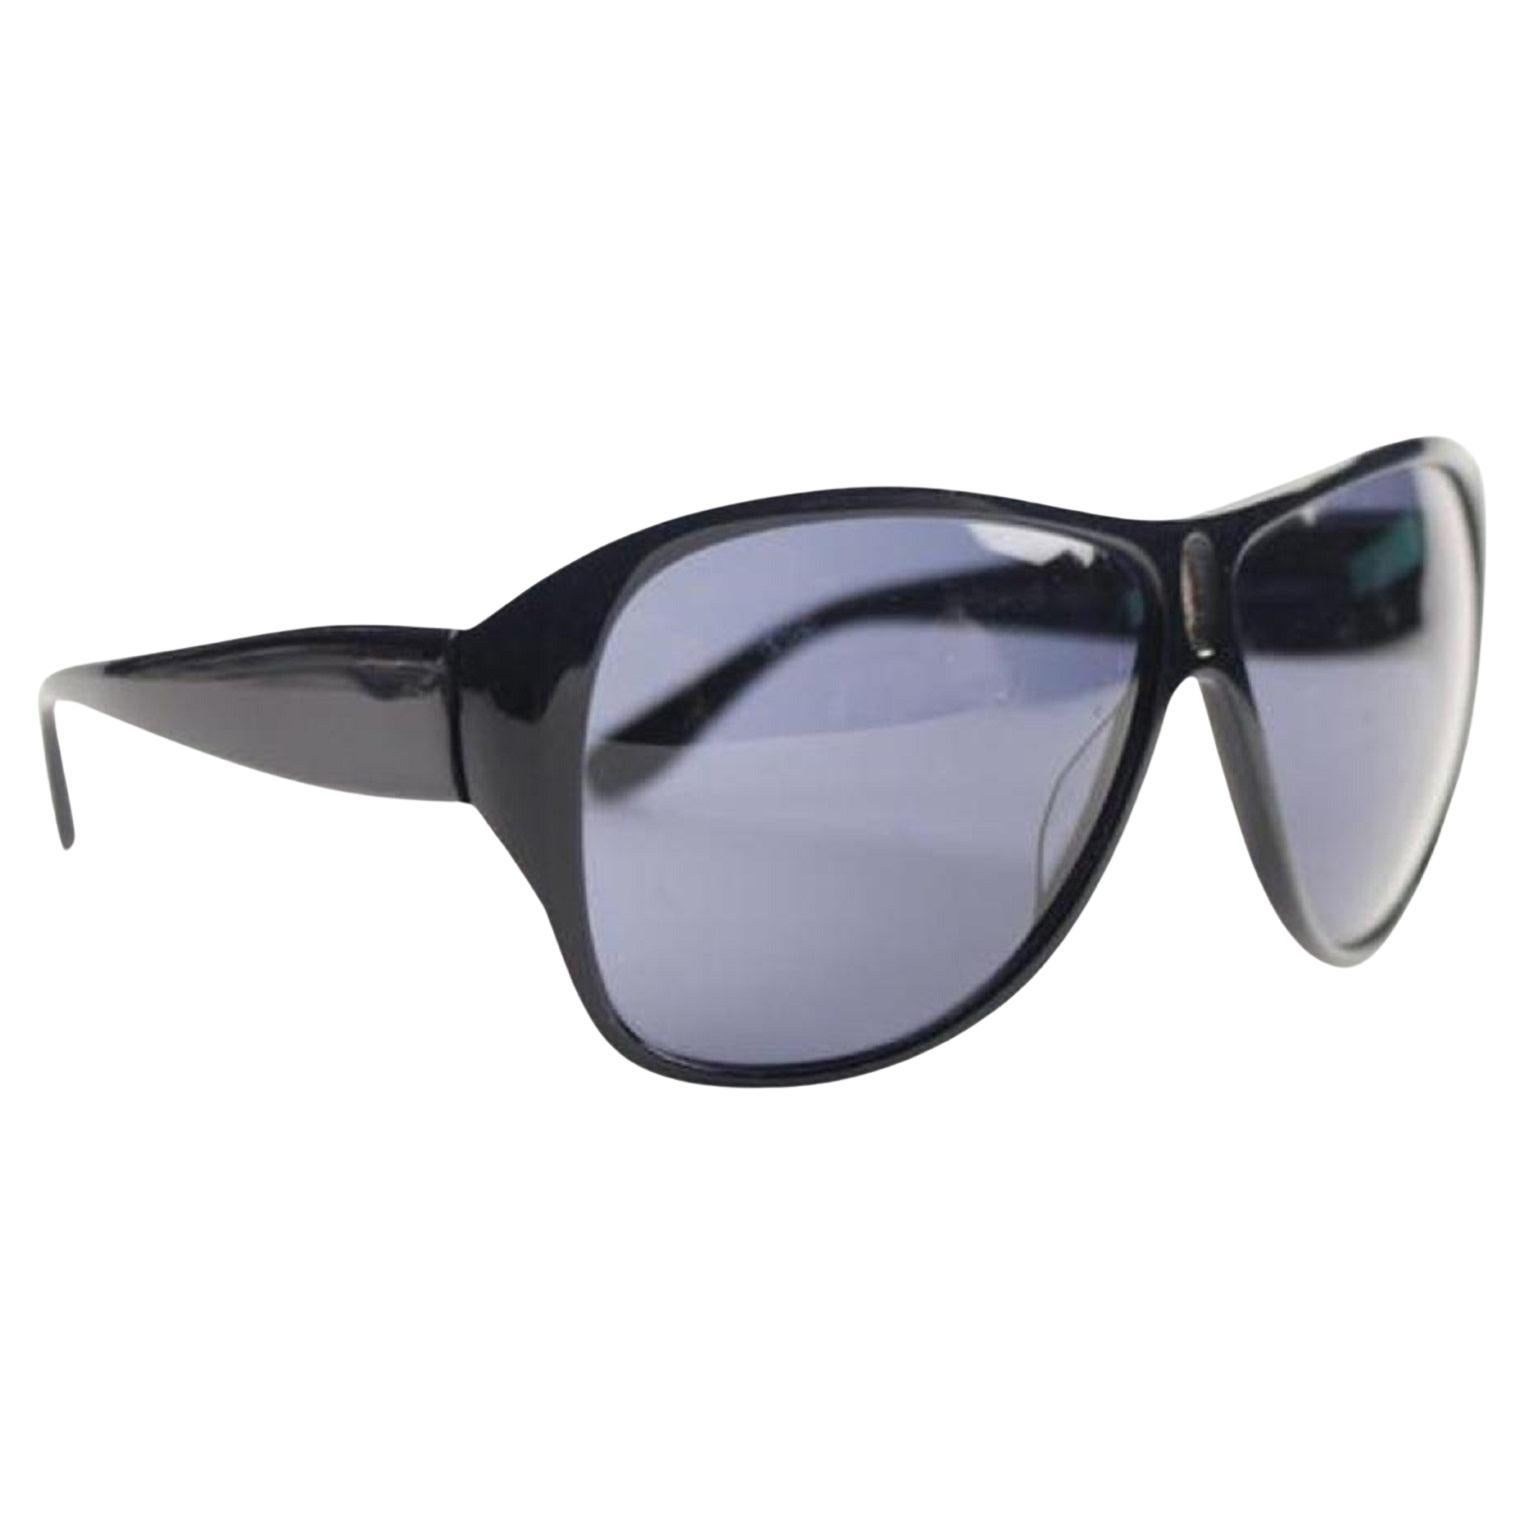 Derek Lam 60 9-128 61dla919 Sunglasses For Sale